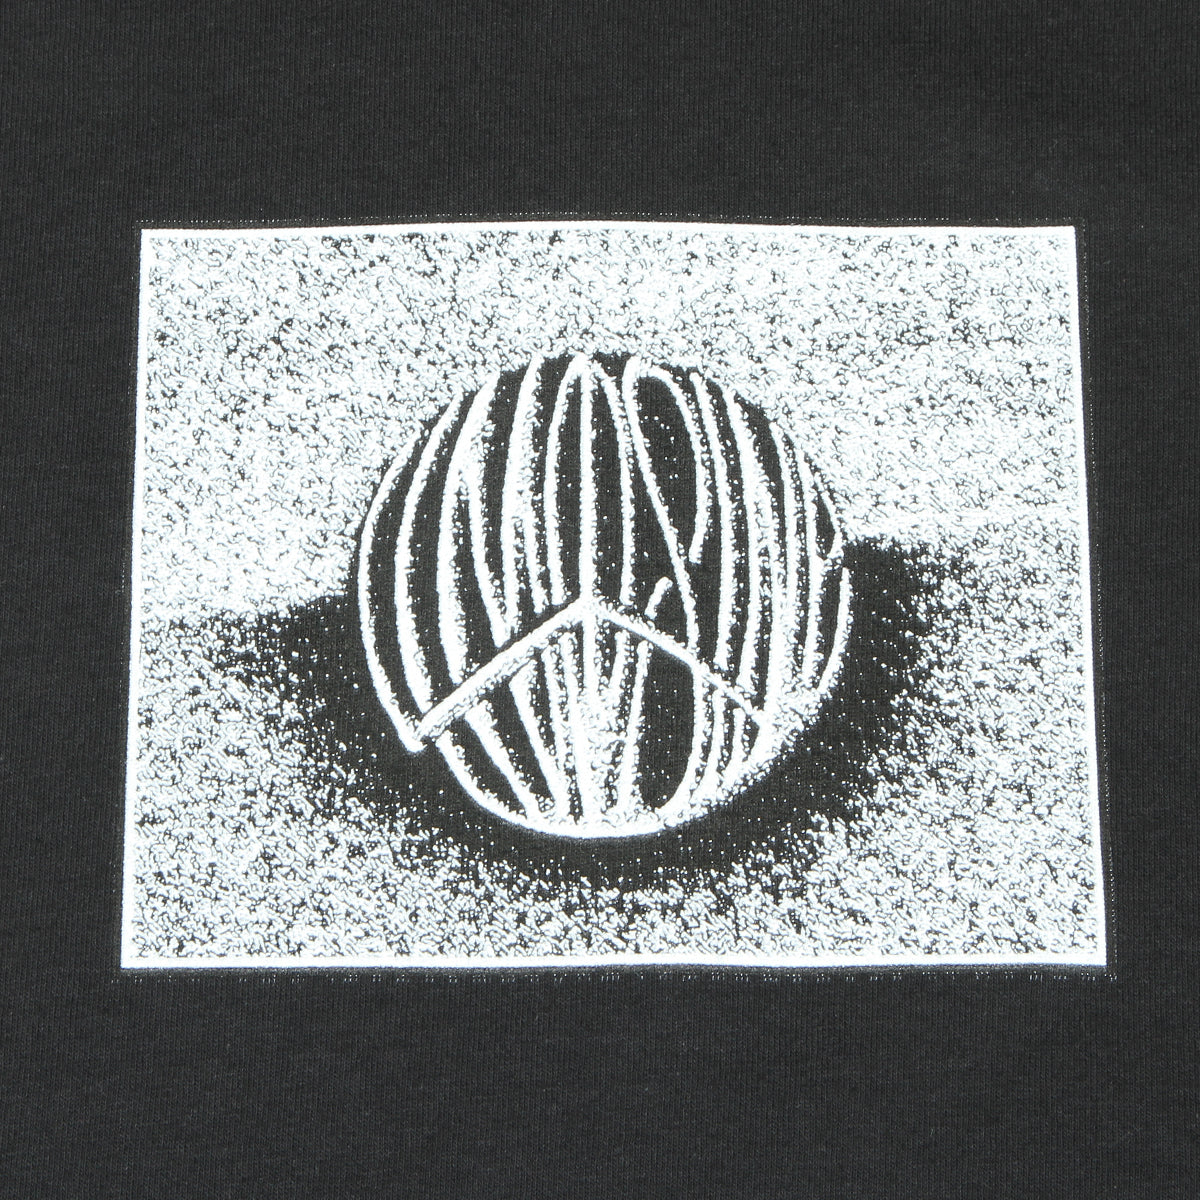 Limosine | Peace Ball T-Shirt Black